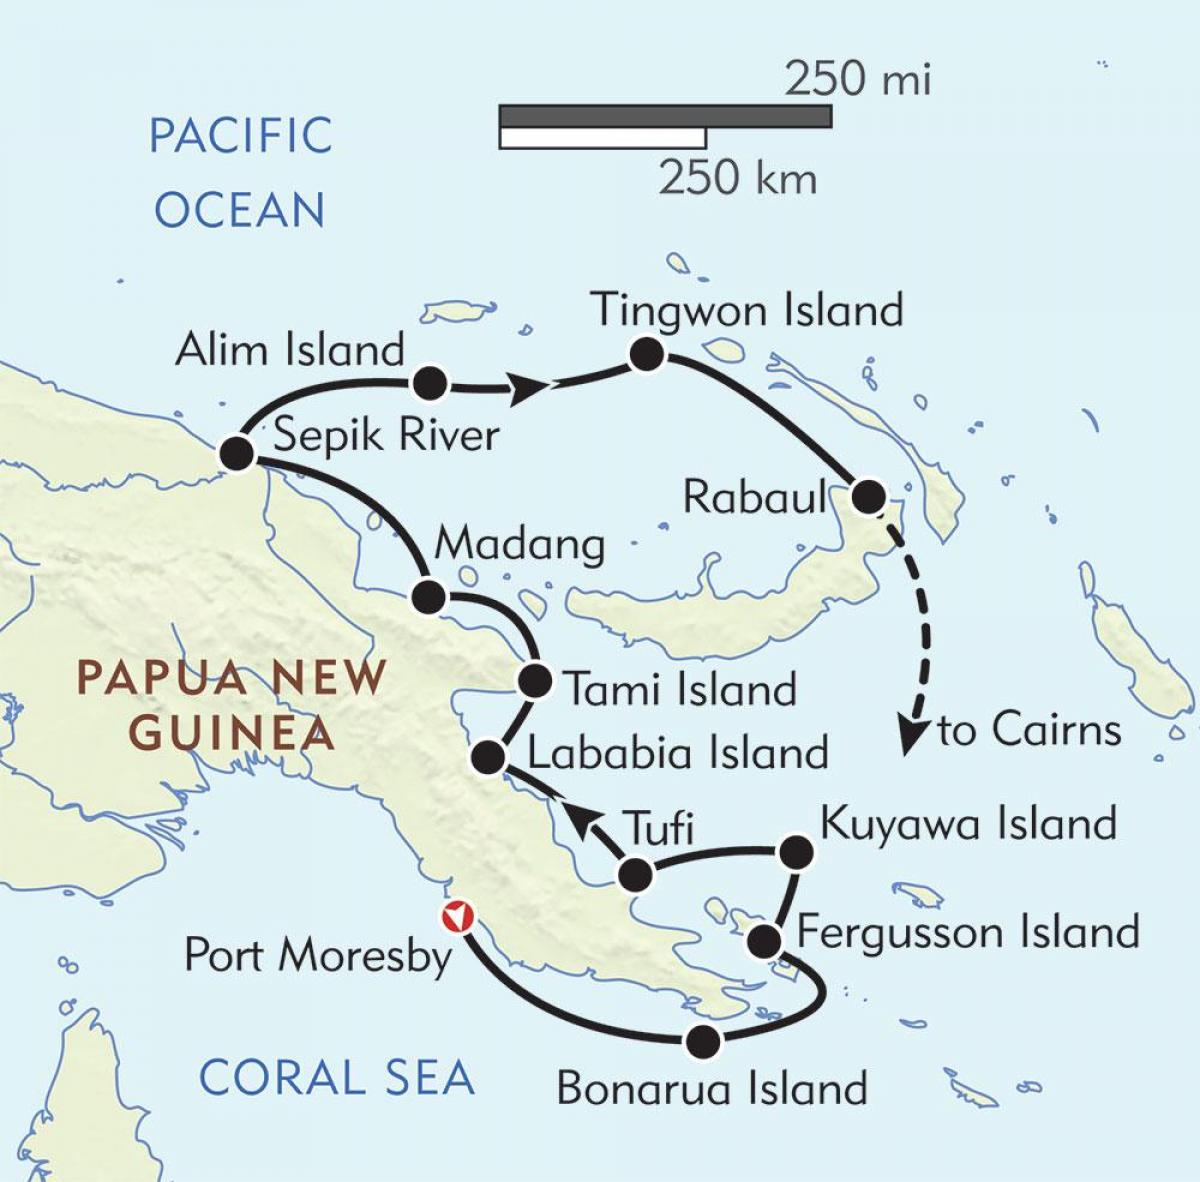 kart over rabaul papua ny-guinea